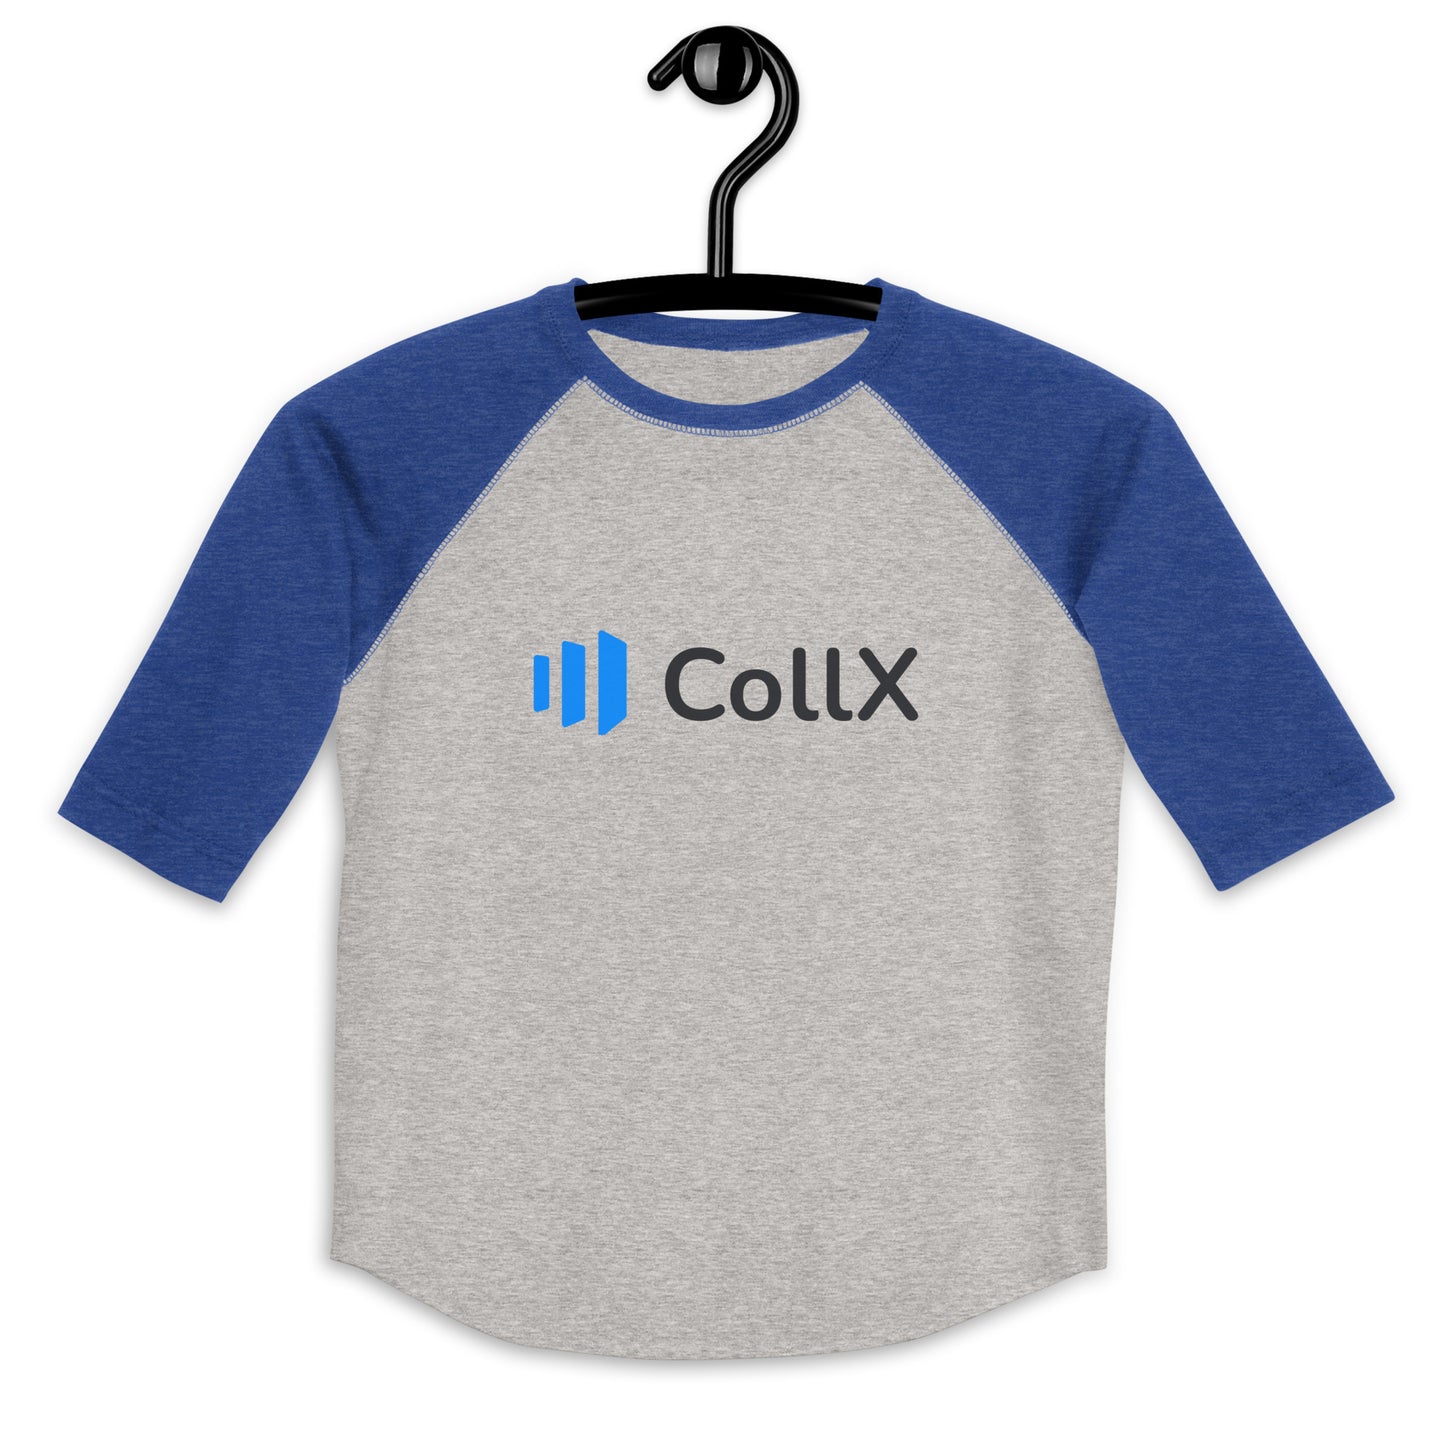 CollX Youth Baseball Shirt